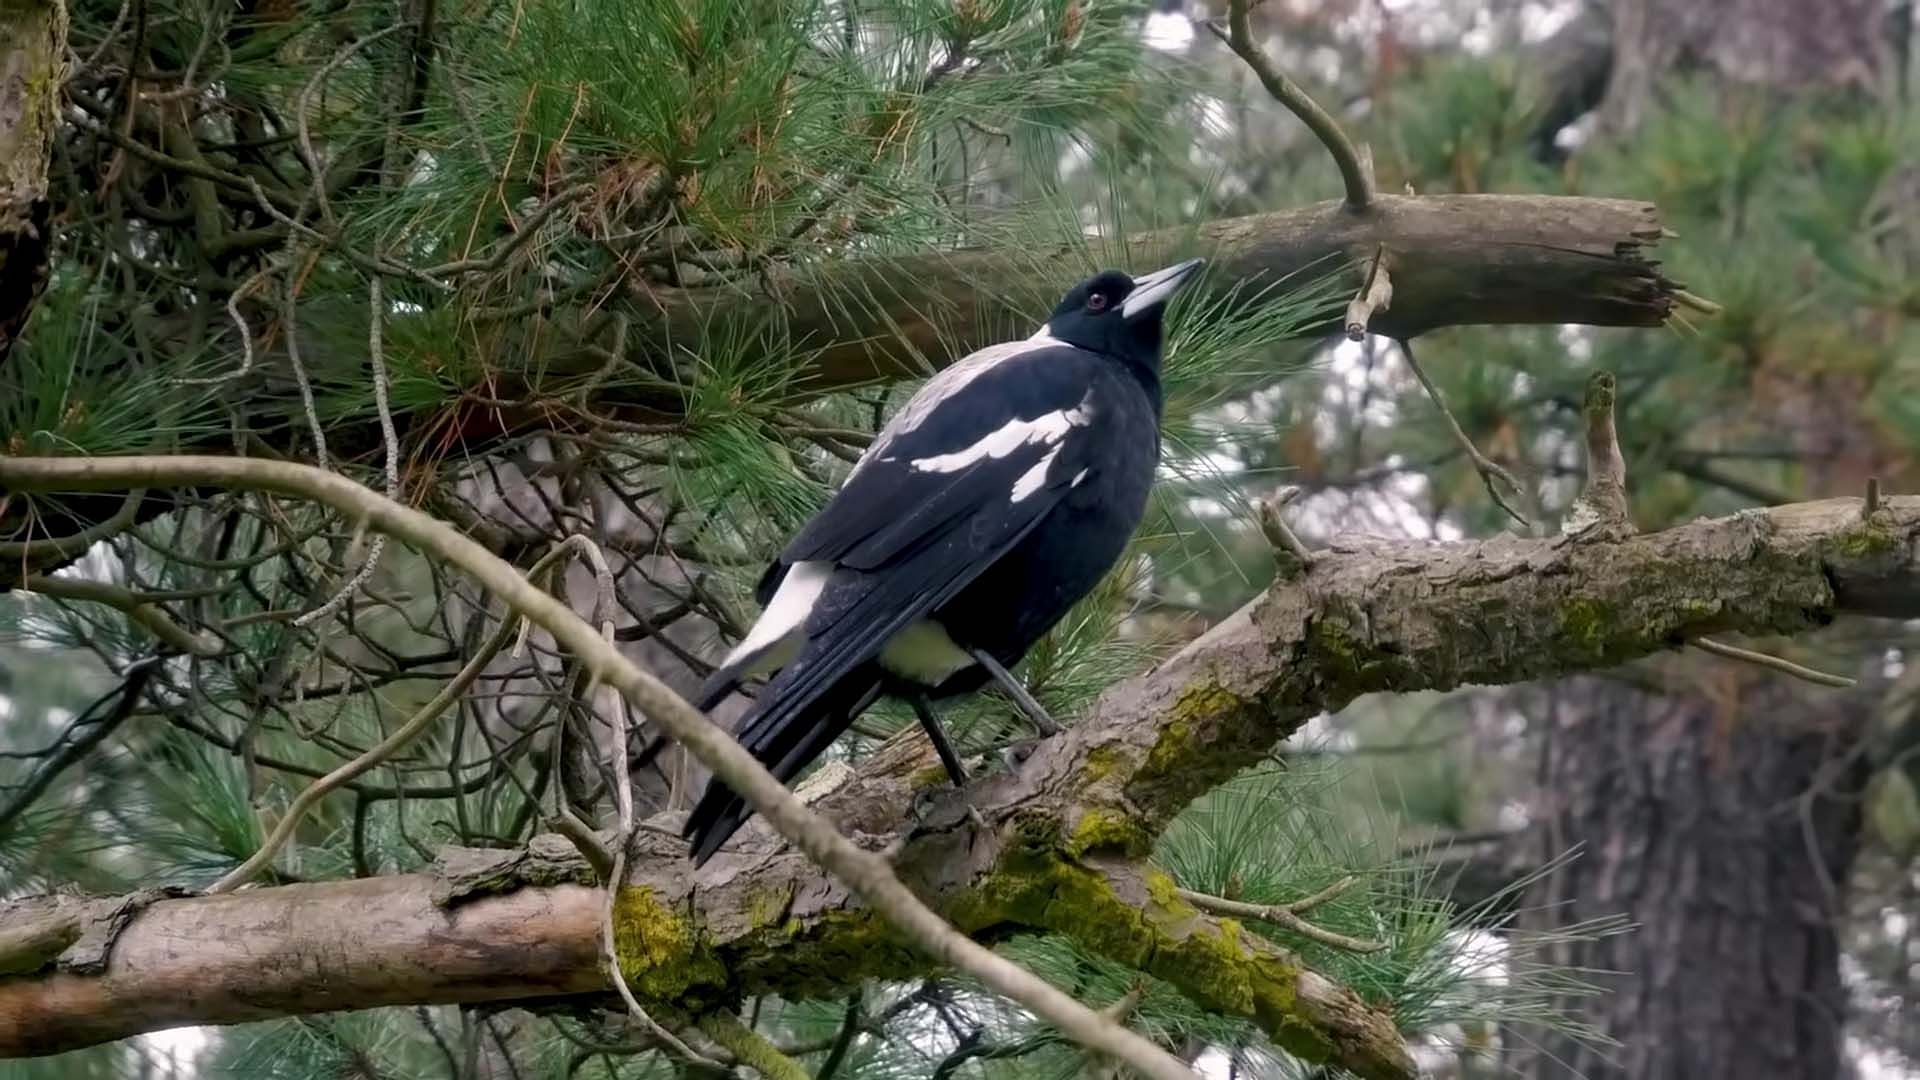 A magpie (Image via YouTube/@The Backyard Naturalist)